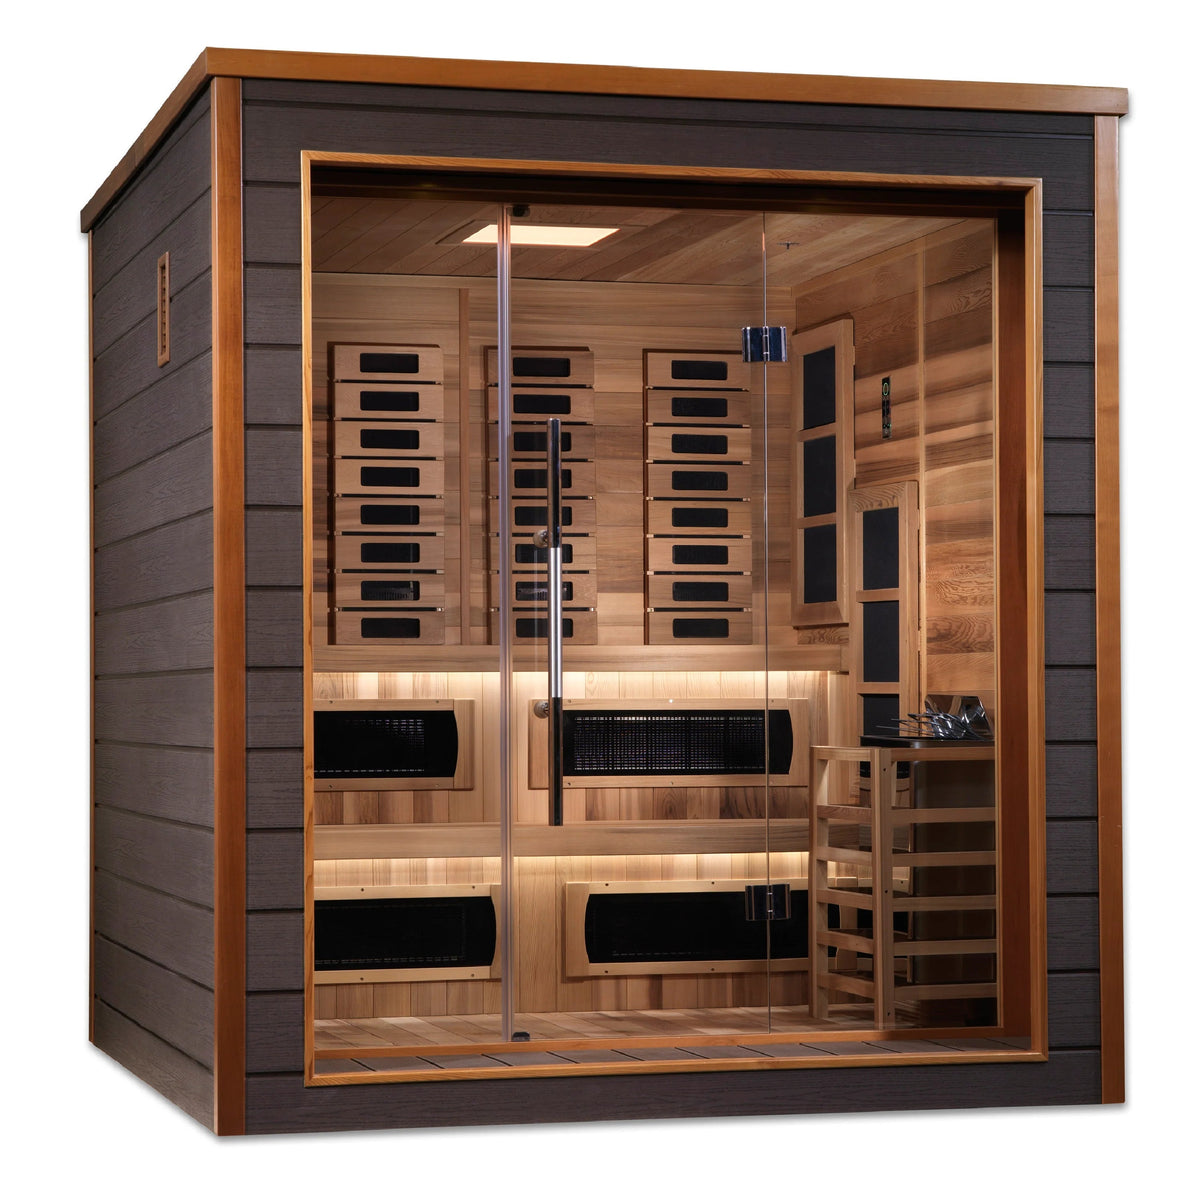 Golden Designs Karlstad 6 Person Outdoor-Indoor Hybrid Full Spectrum Sauna